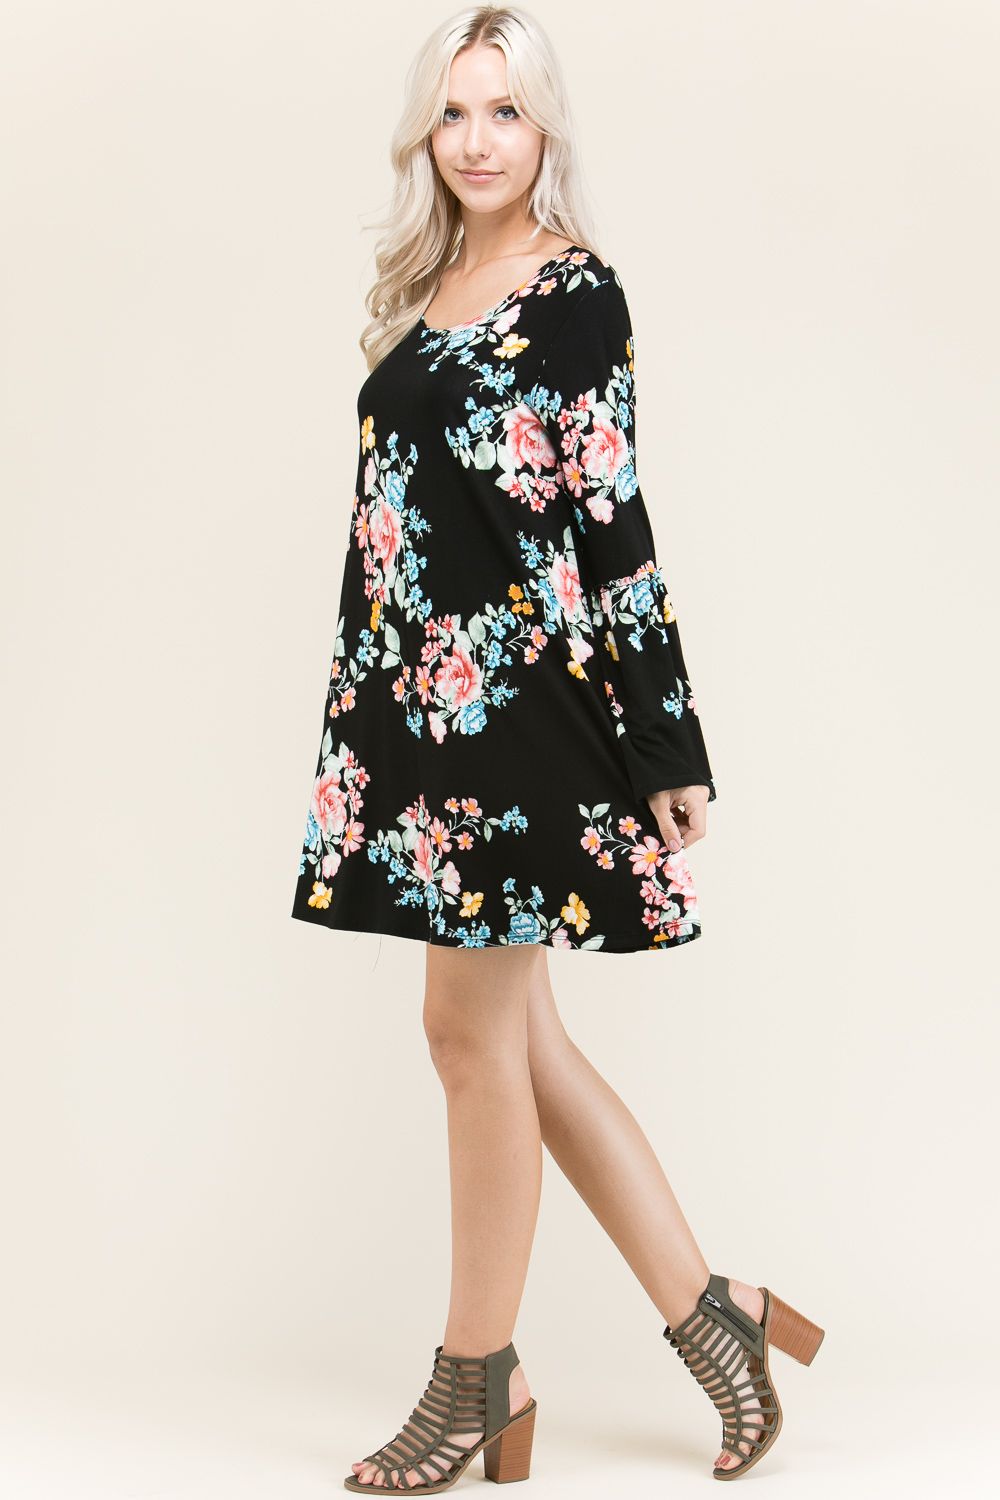 Très Bien Clothing Bell Sleeves Black Floral Roses Print Dress - USA